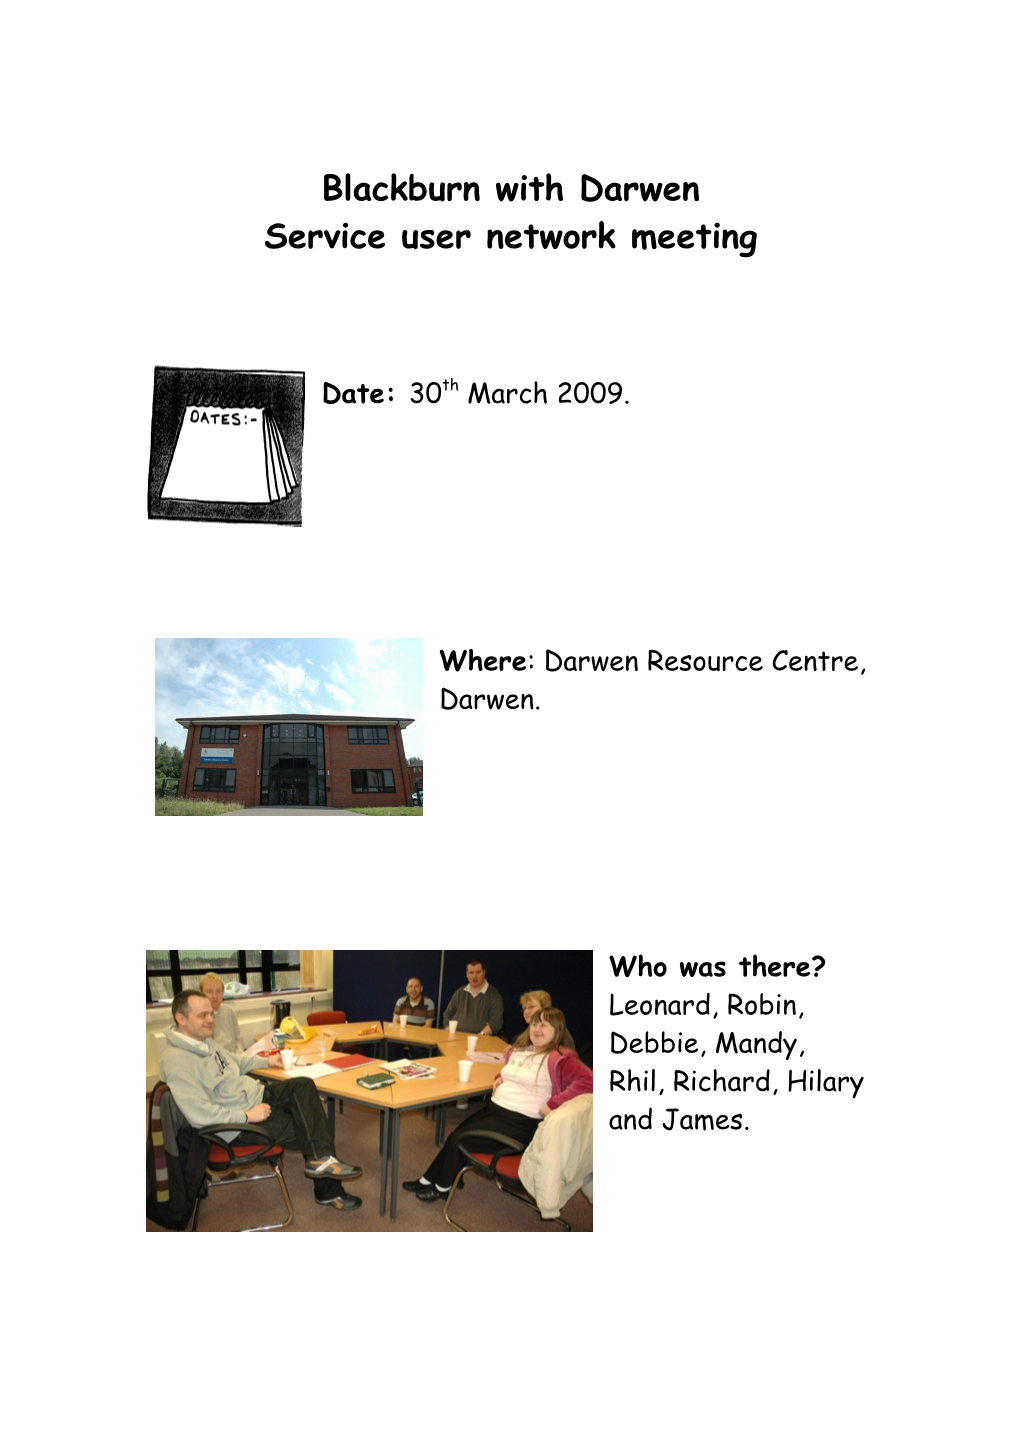 Blackburn Service Users Network Meeting